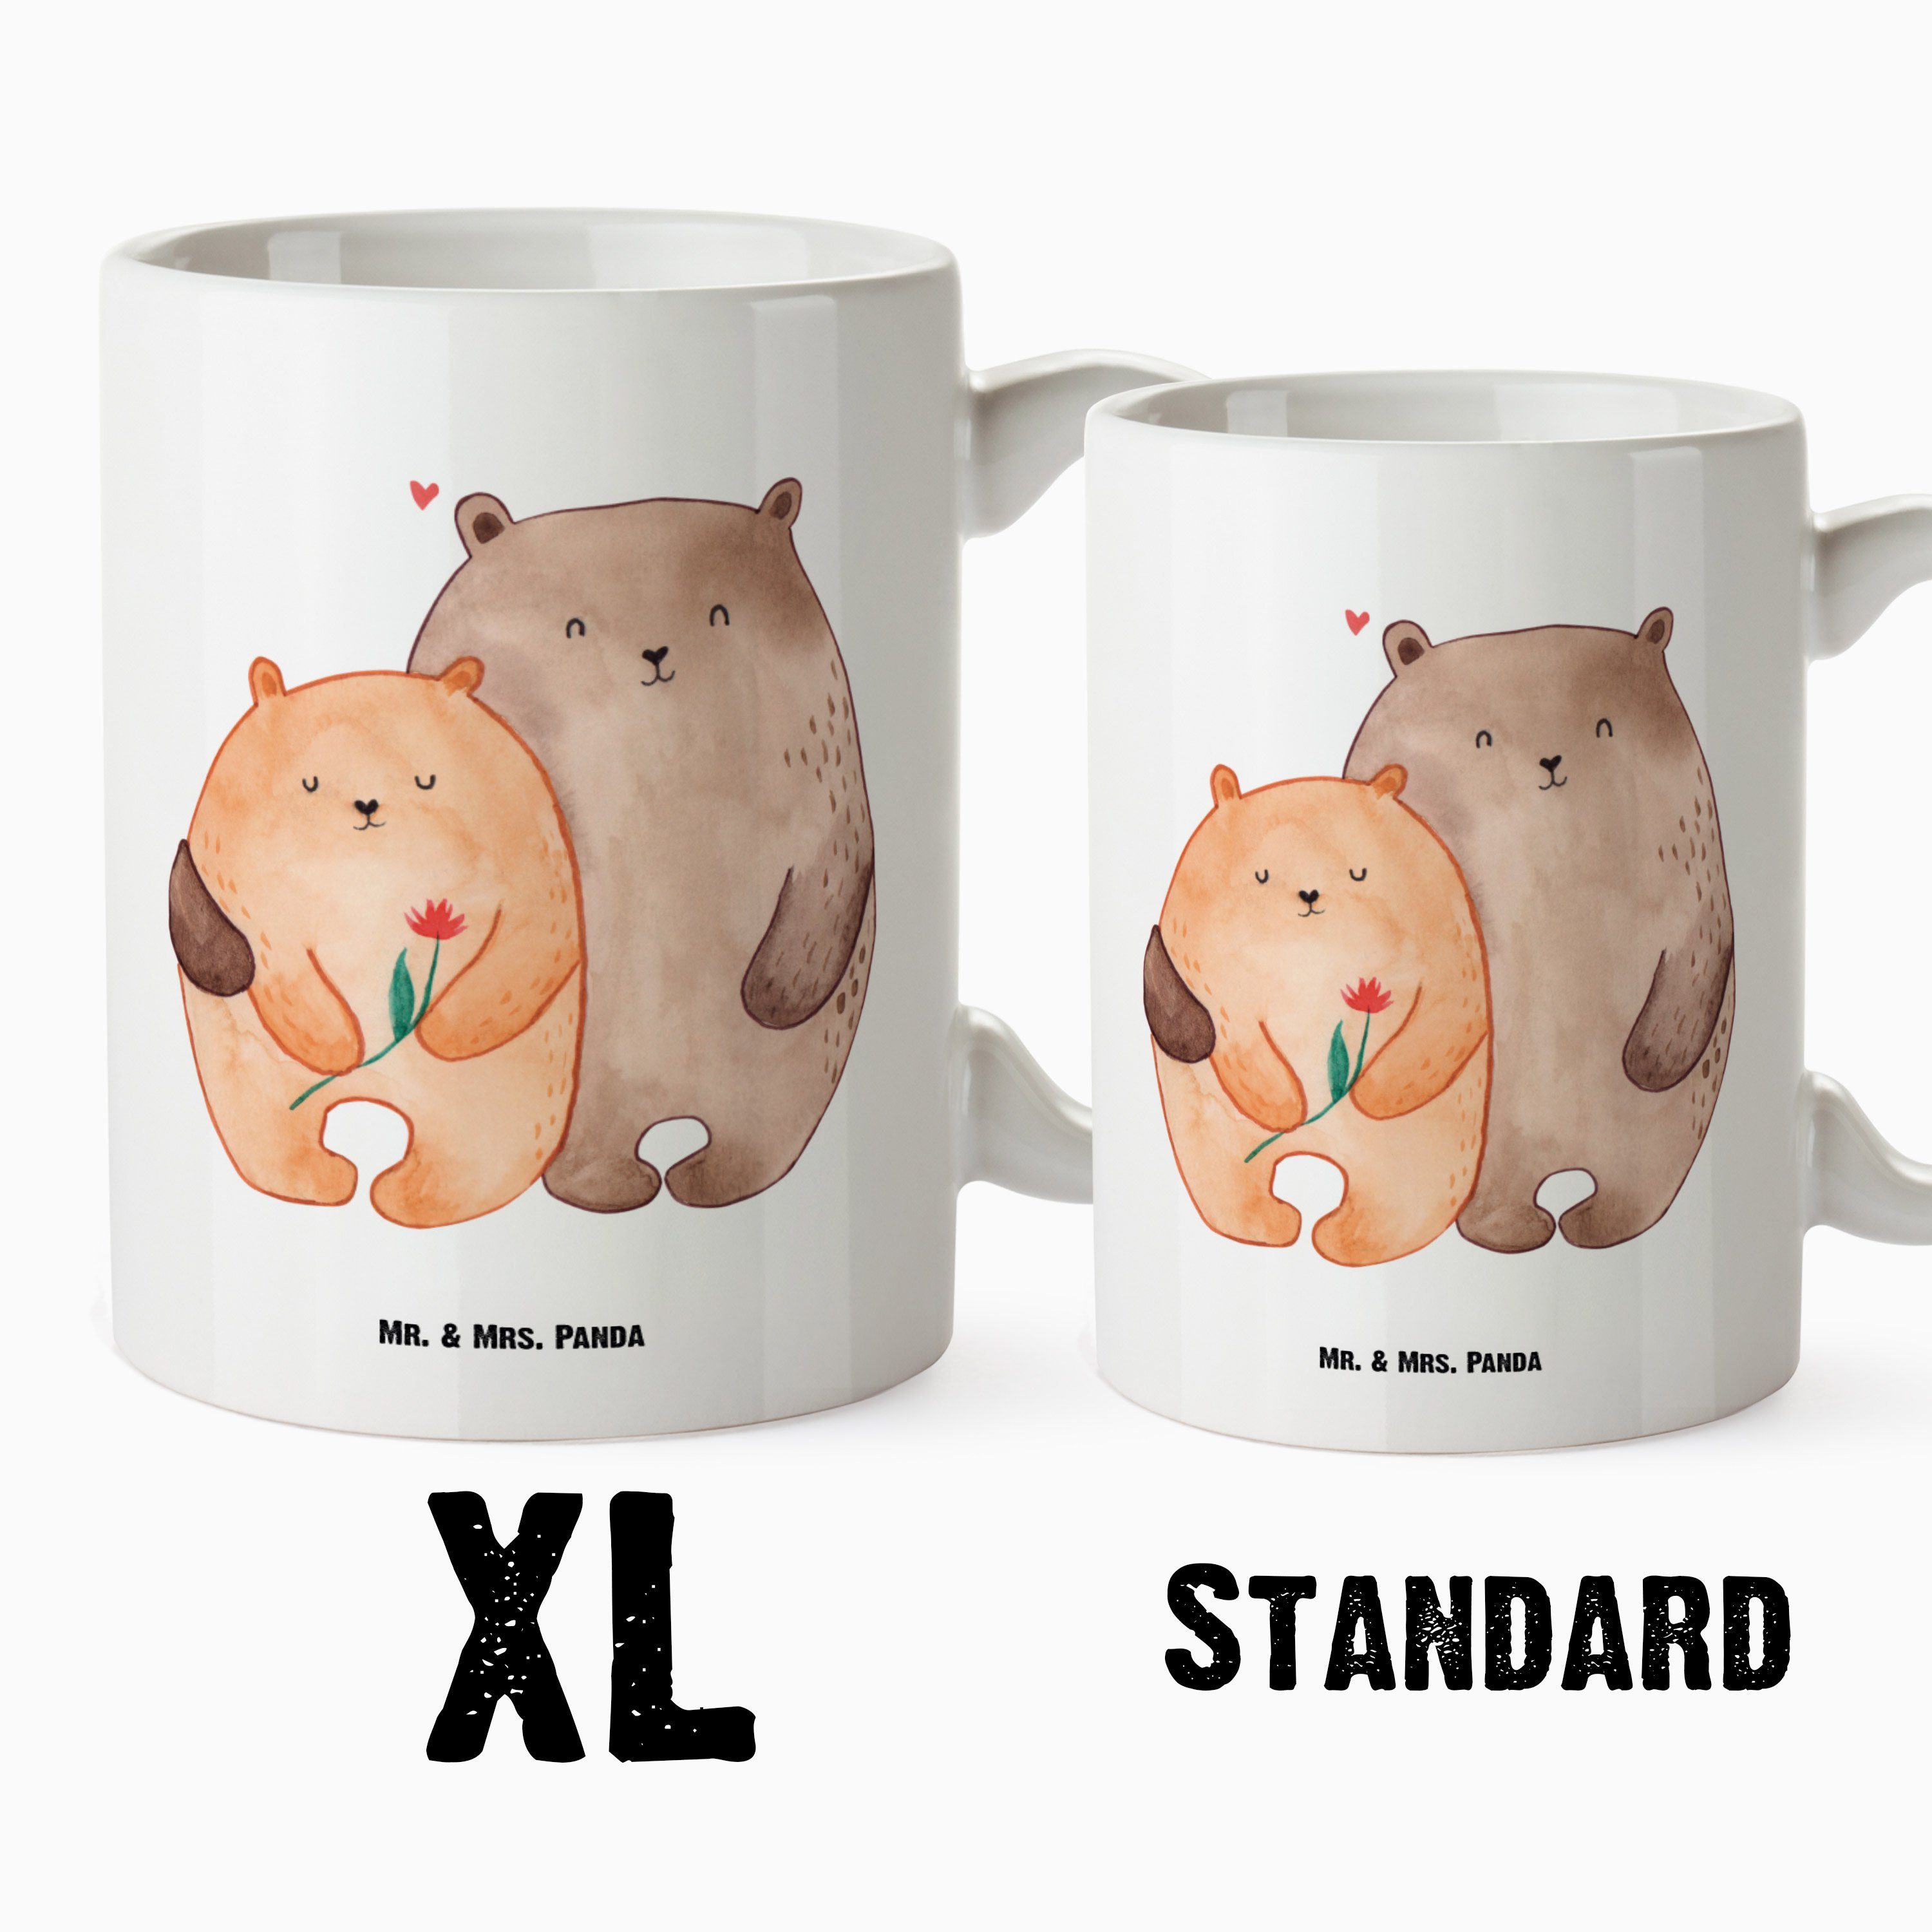 Mr. & Mrs. Panda Tasse XL Bären Freundin, - Groß, Tasse Weiß - XL Keramik Teetasse, Liebe Geschenk, Heiraten